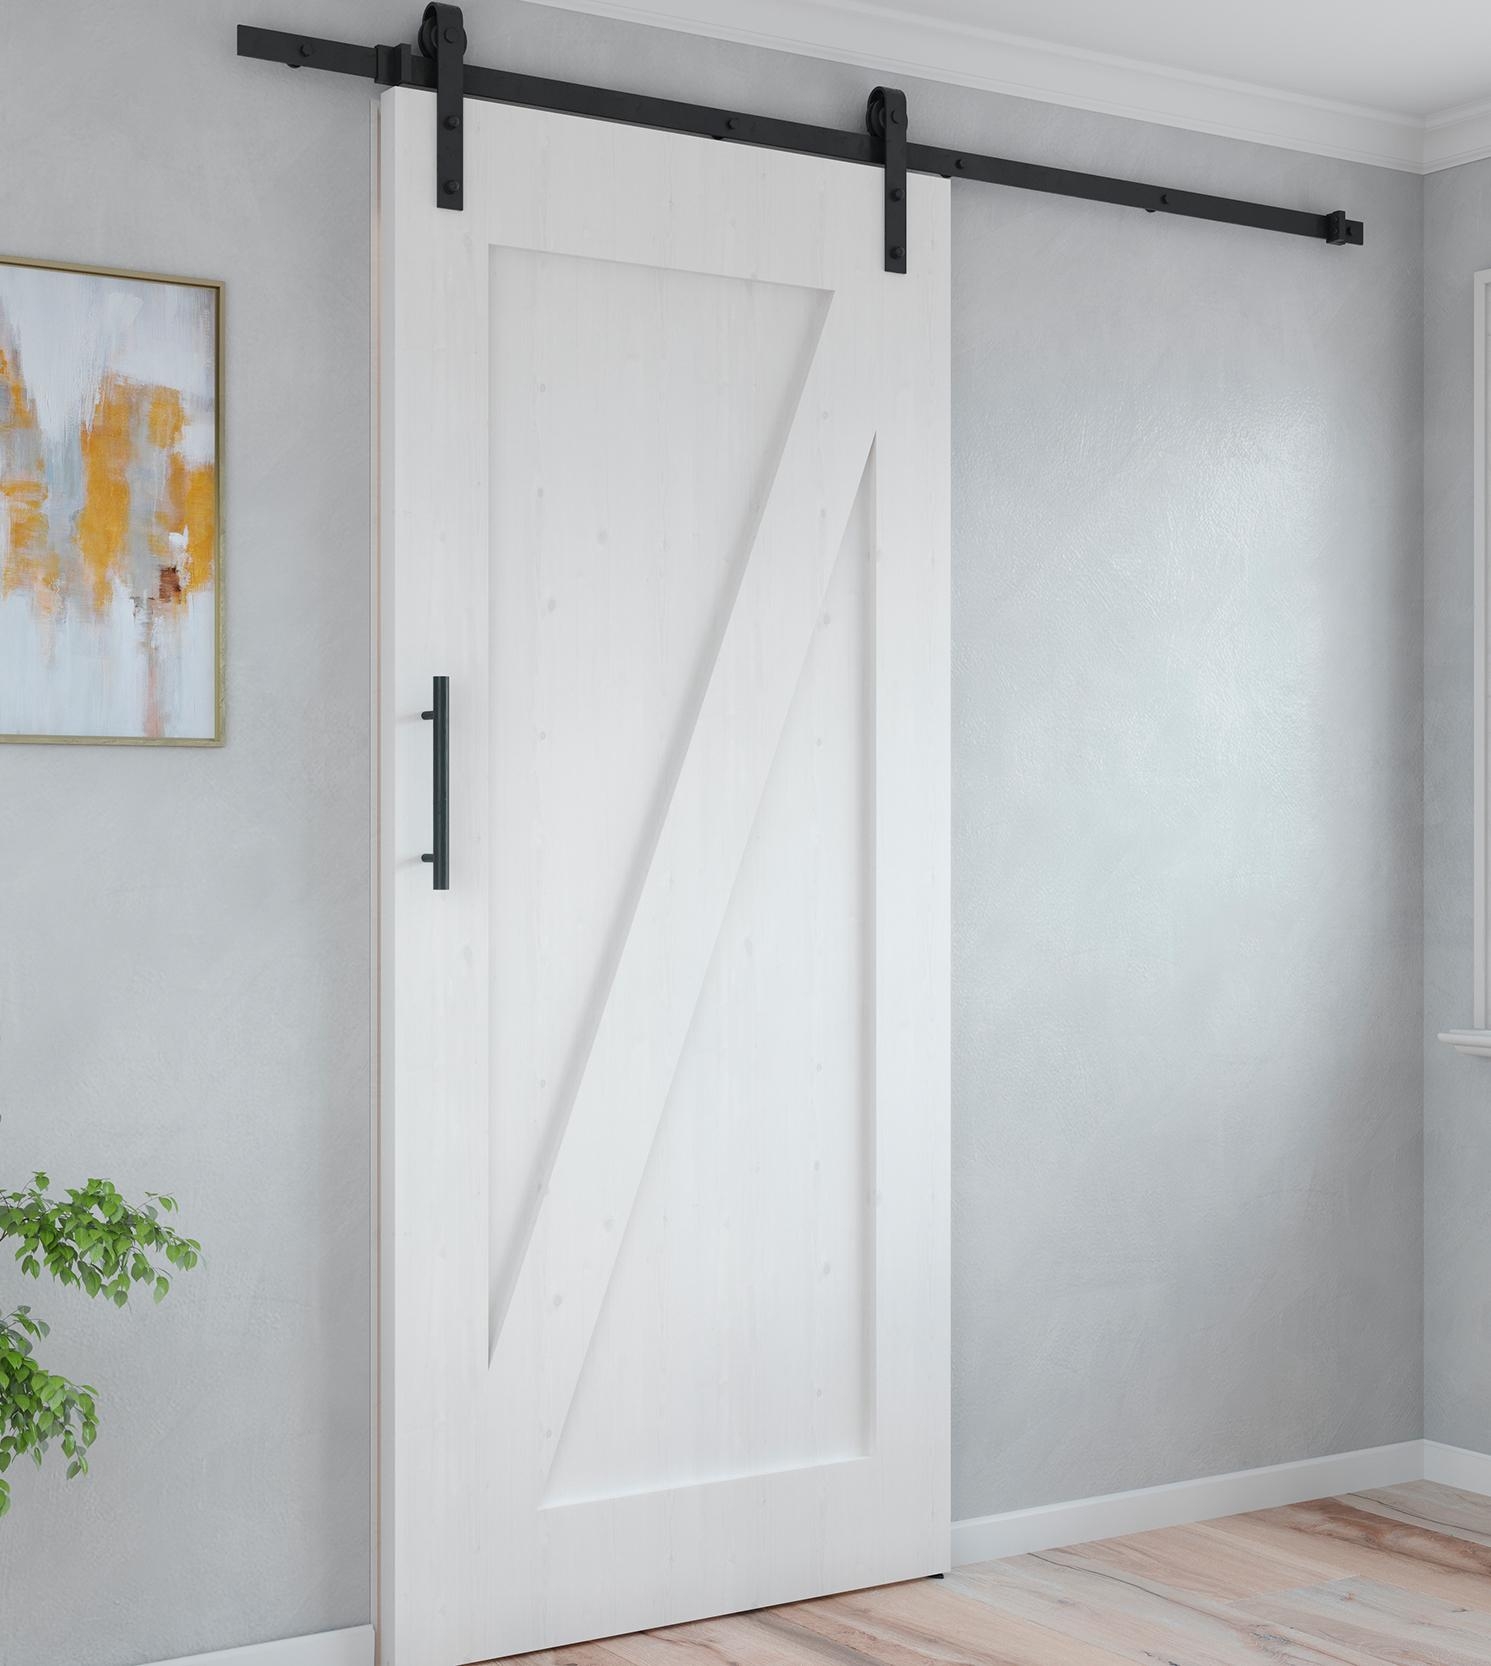 Barn Door porta scorrevole bianca  Stile granaio binario in ferro - XLAB